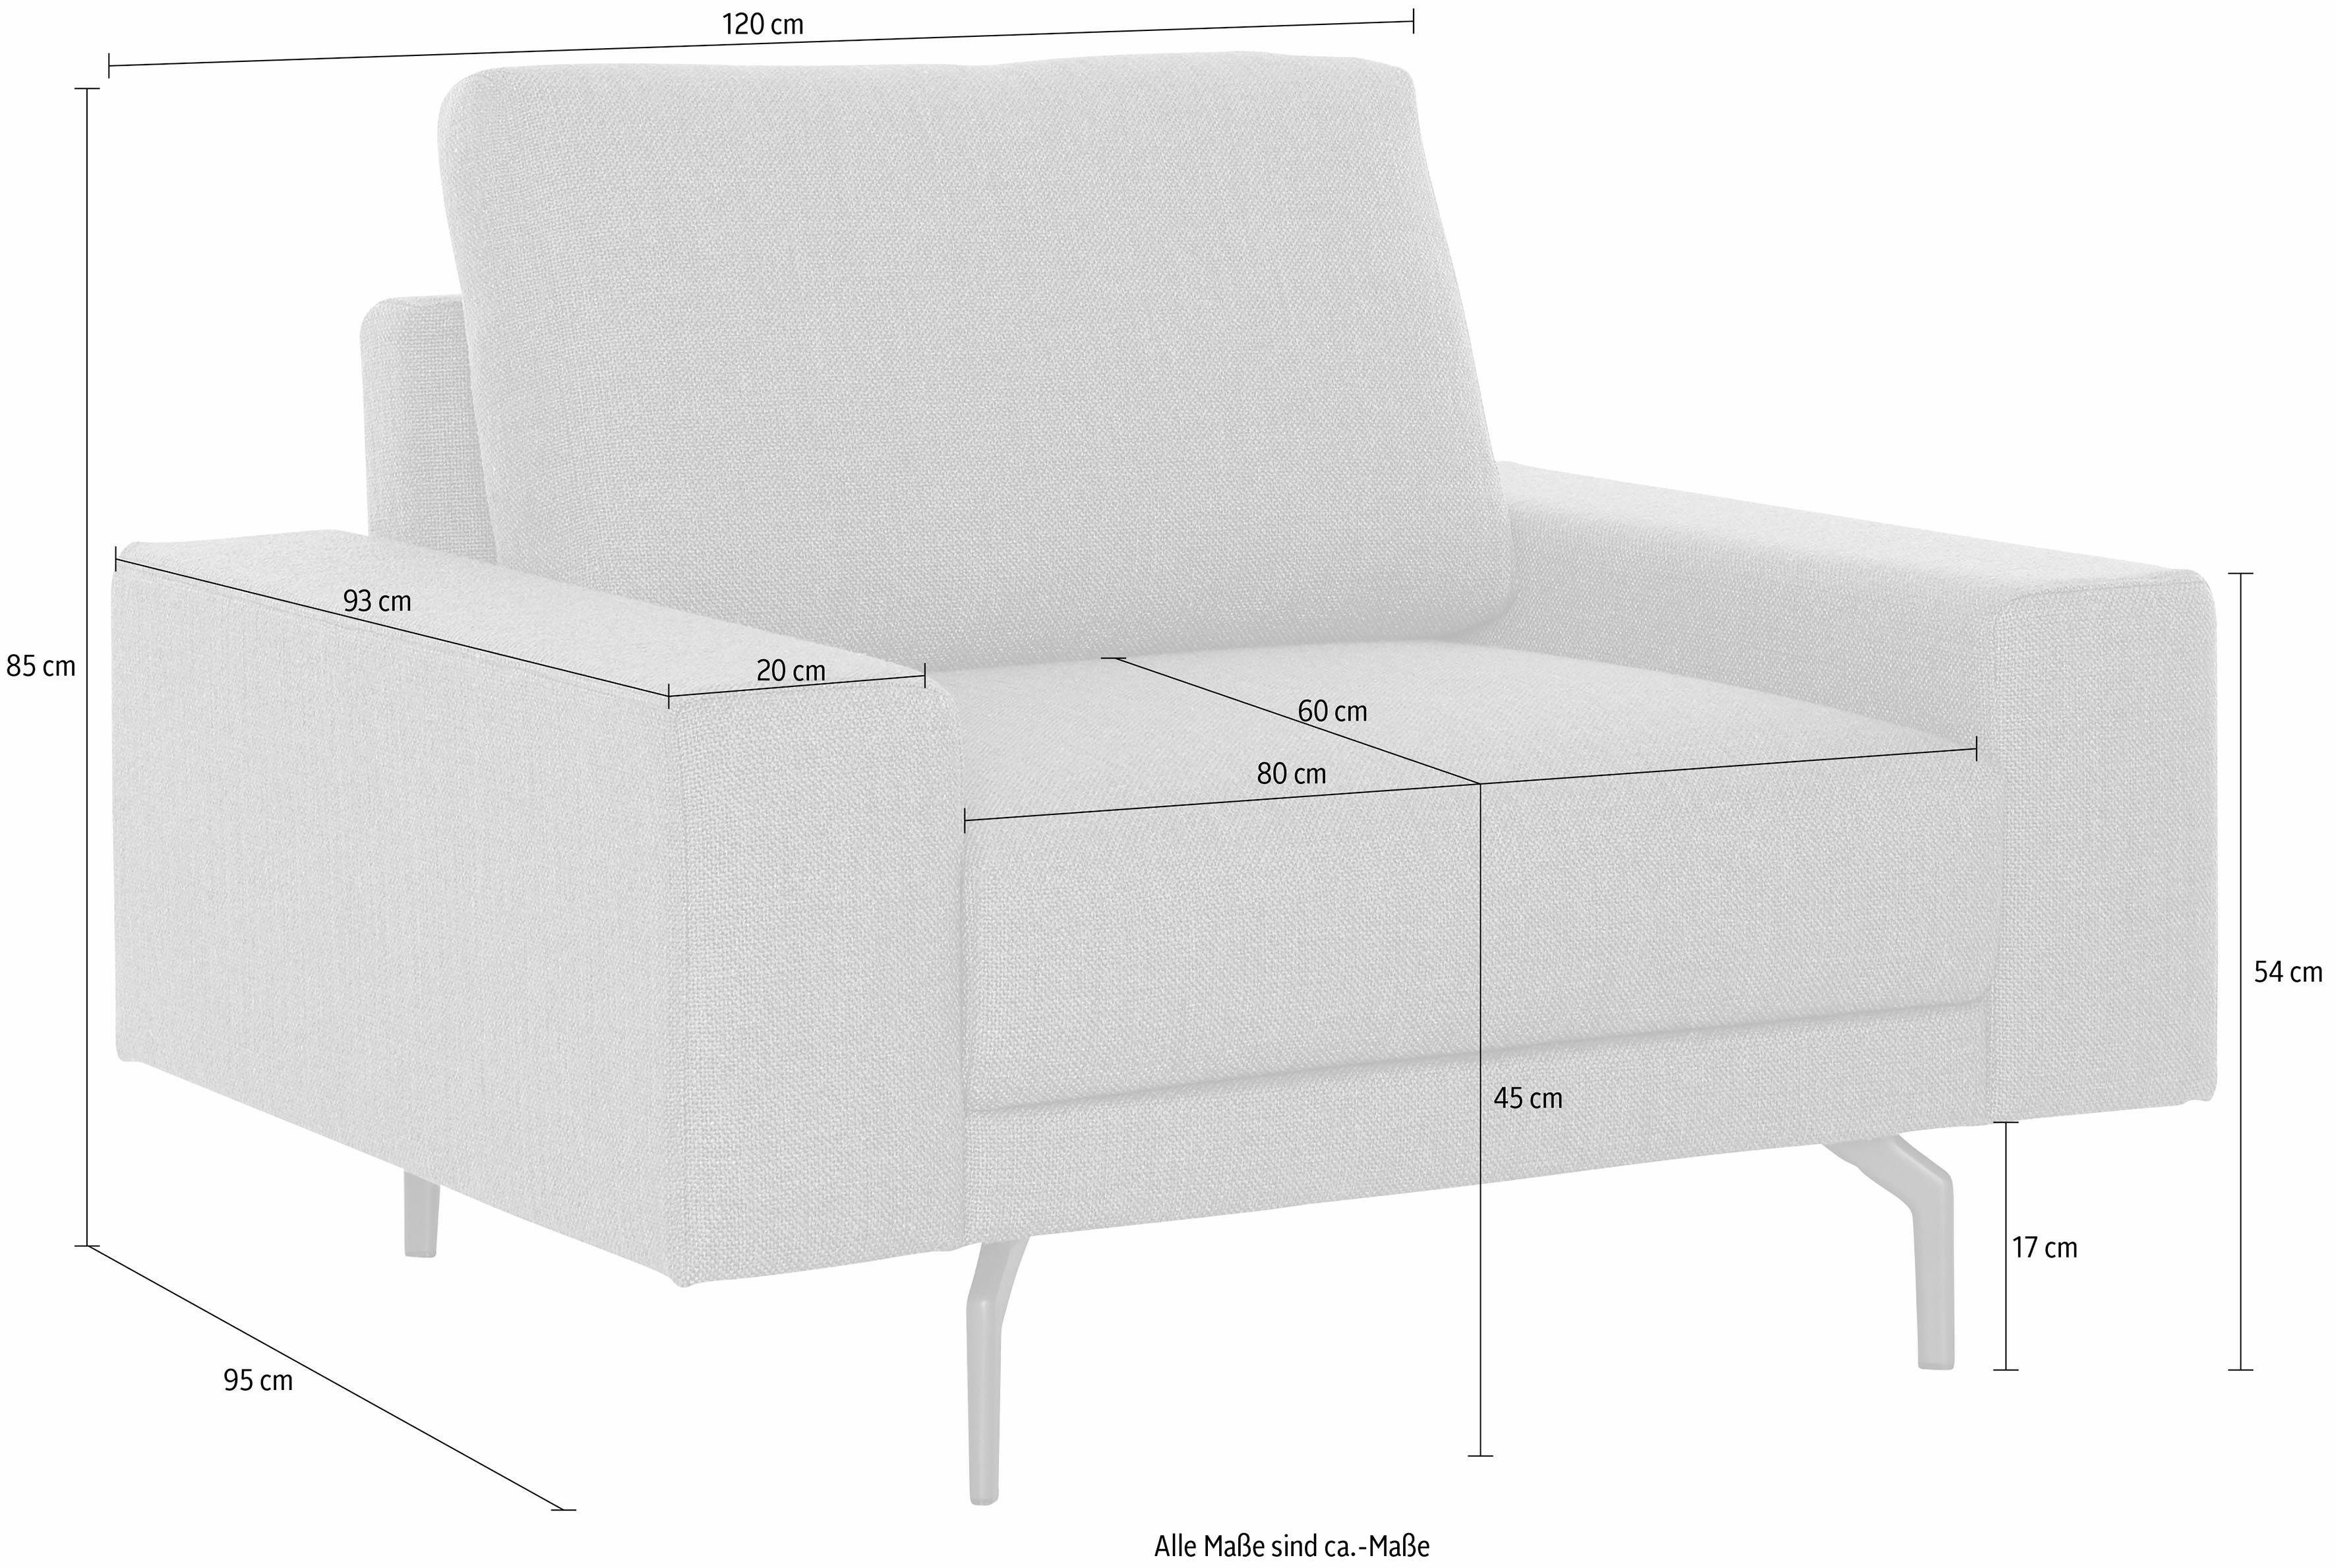 hülsta cm Breite Armlehne Sessel niedrig, hs.450, breit in umbragrau, 120 Alugussfüße sofa